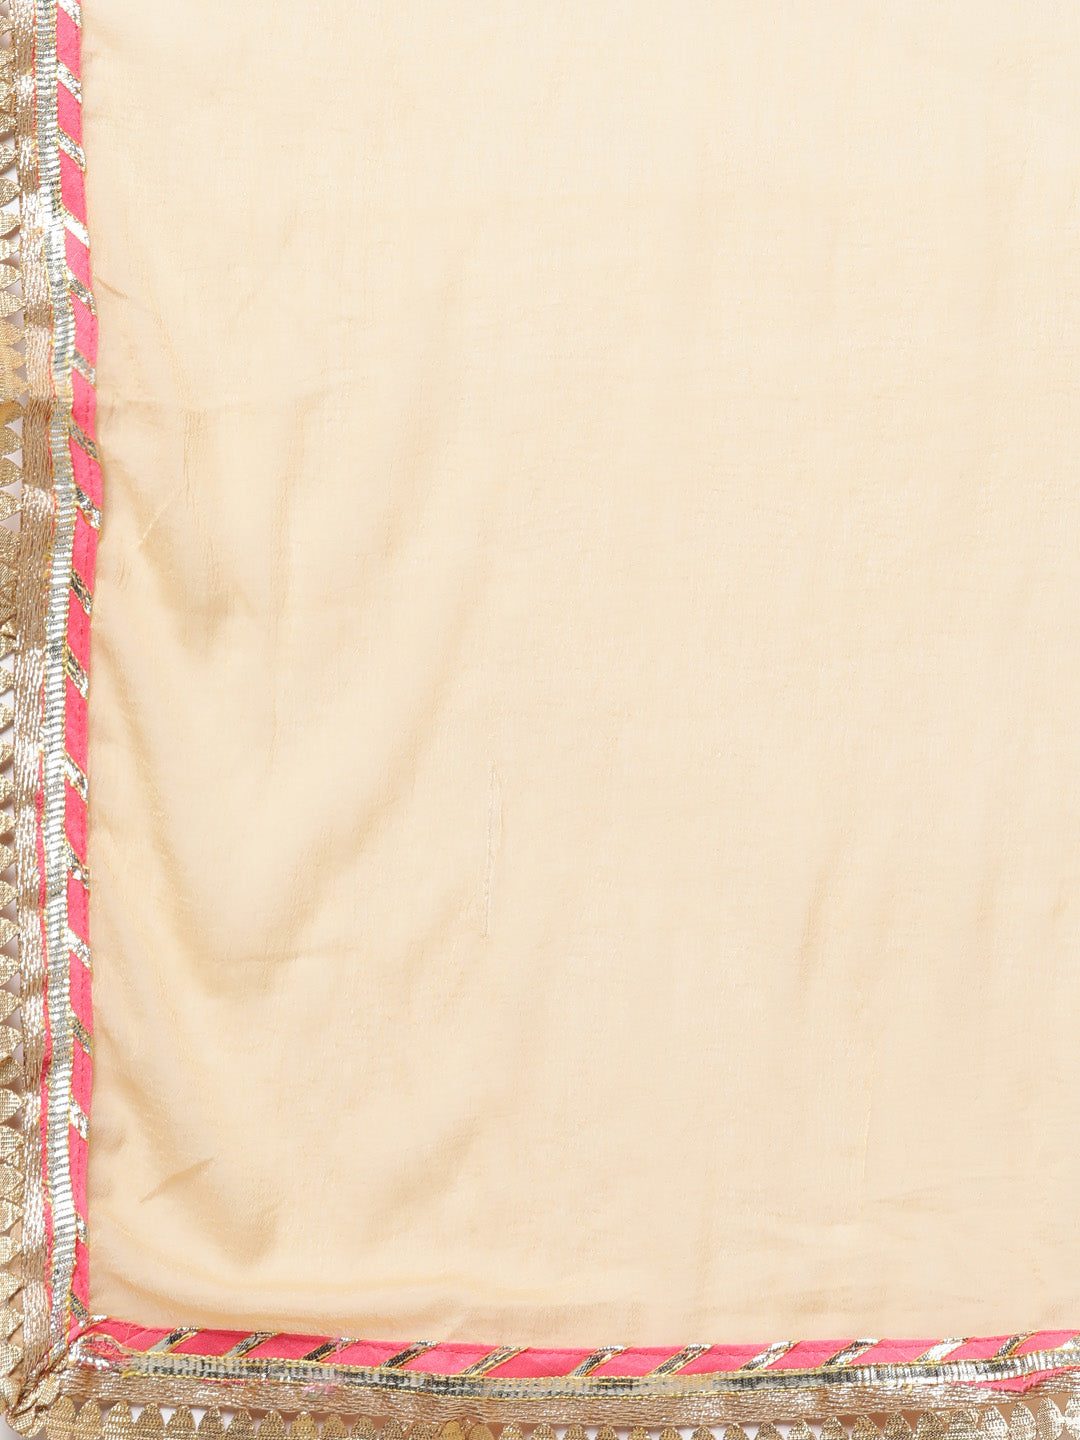 Ishin Women's Chanderi Silk Peach & Beige Embellished A-Line Kurta Skirt Dupatta Set